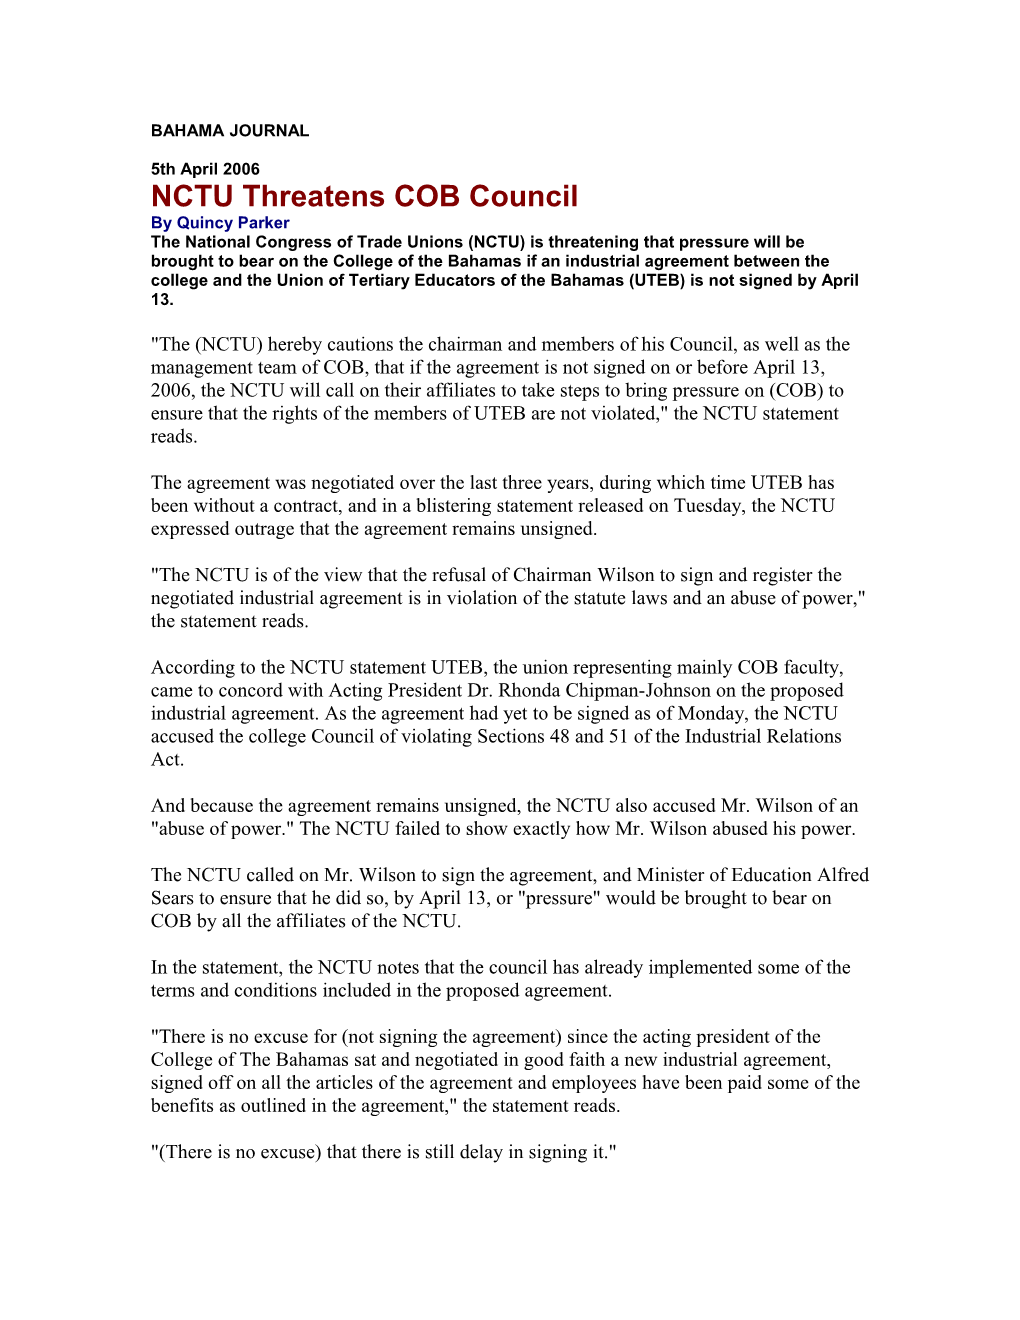 NCTU Threatens COB Council